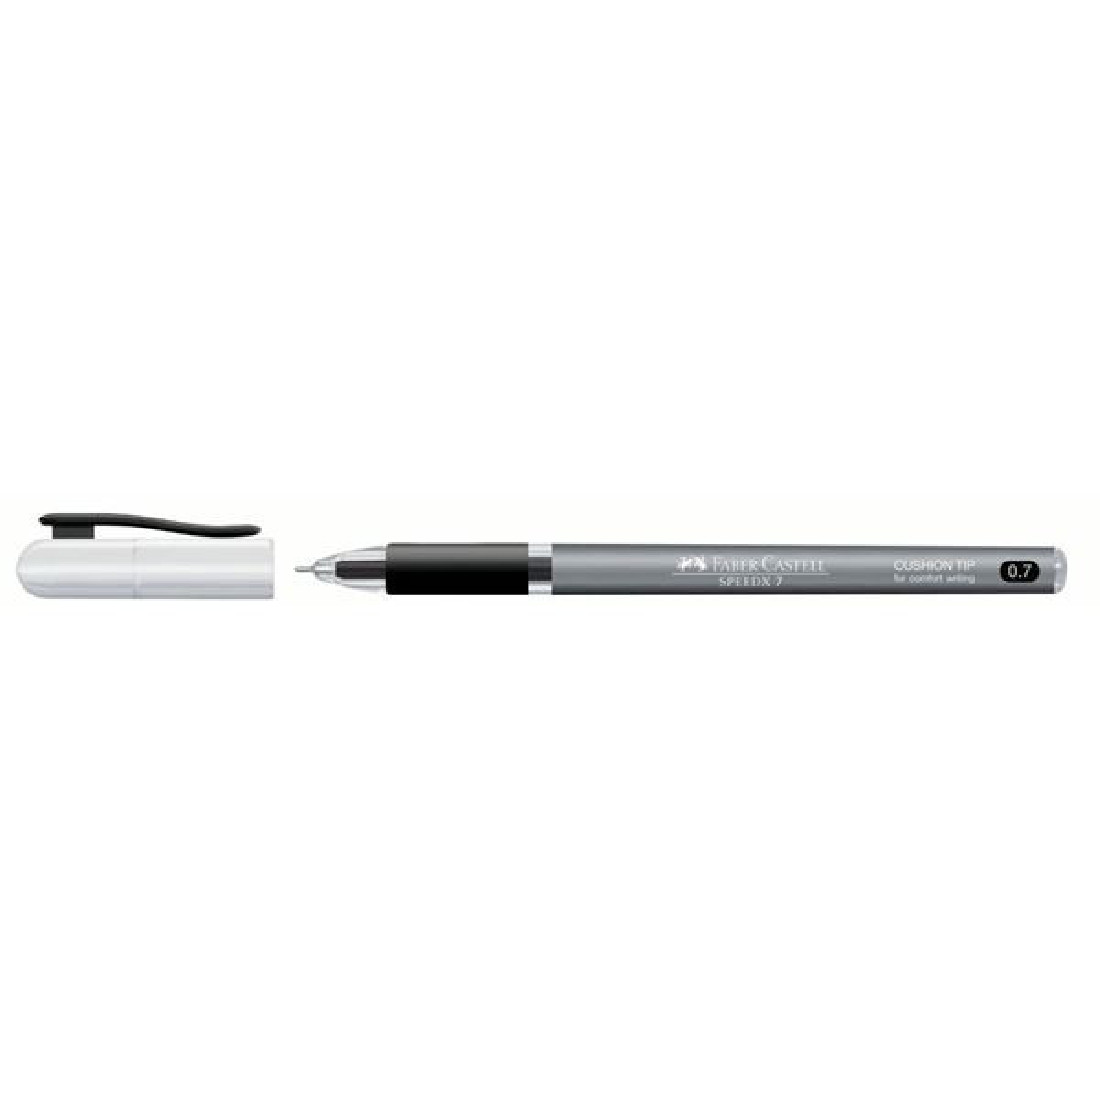 Faber Castell Στυλό μαύρο SpeedX 0,7mm 546299